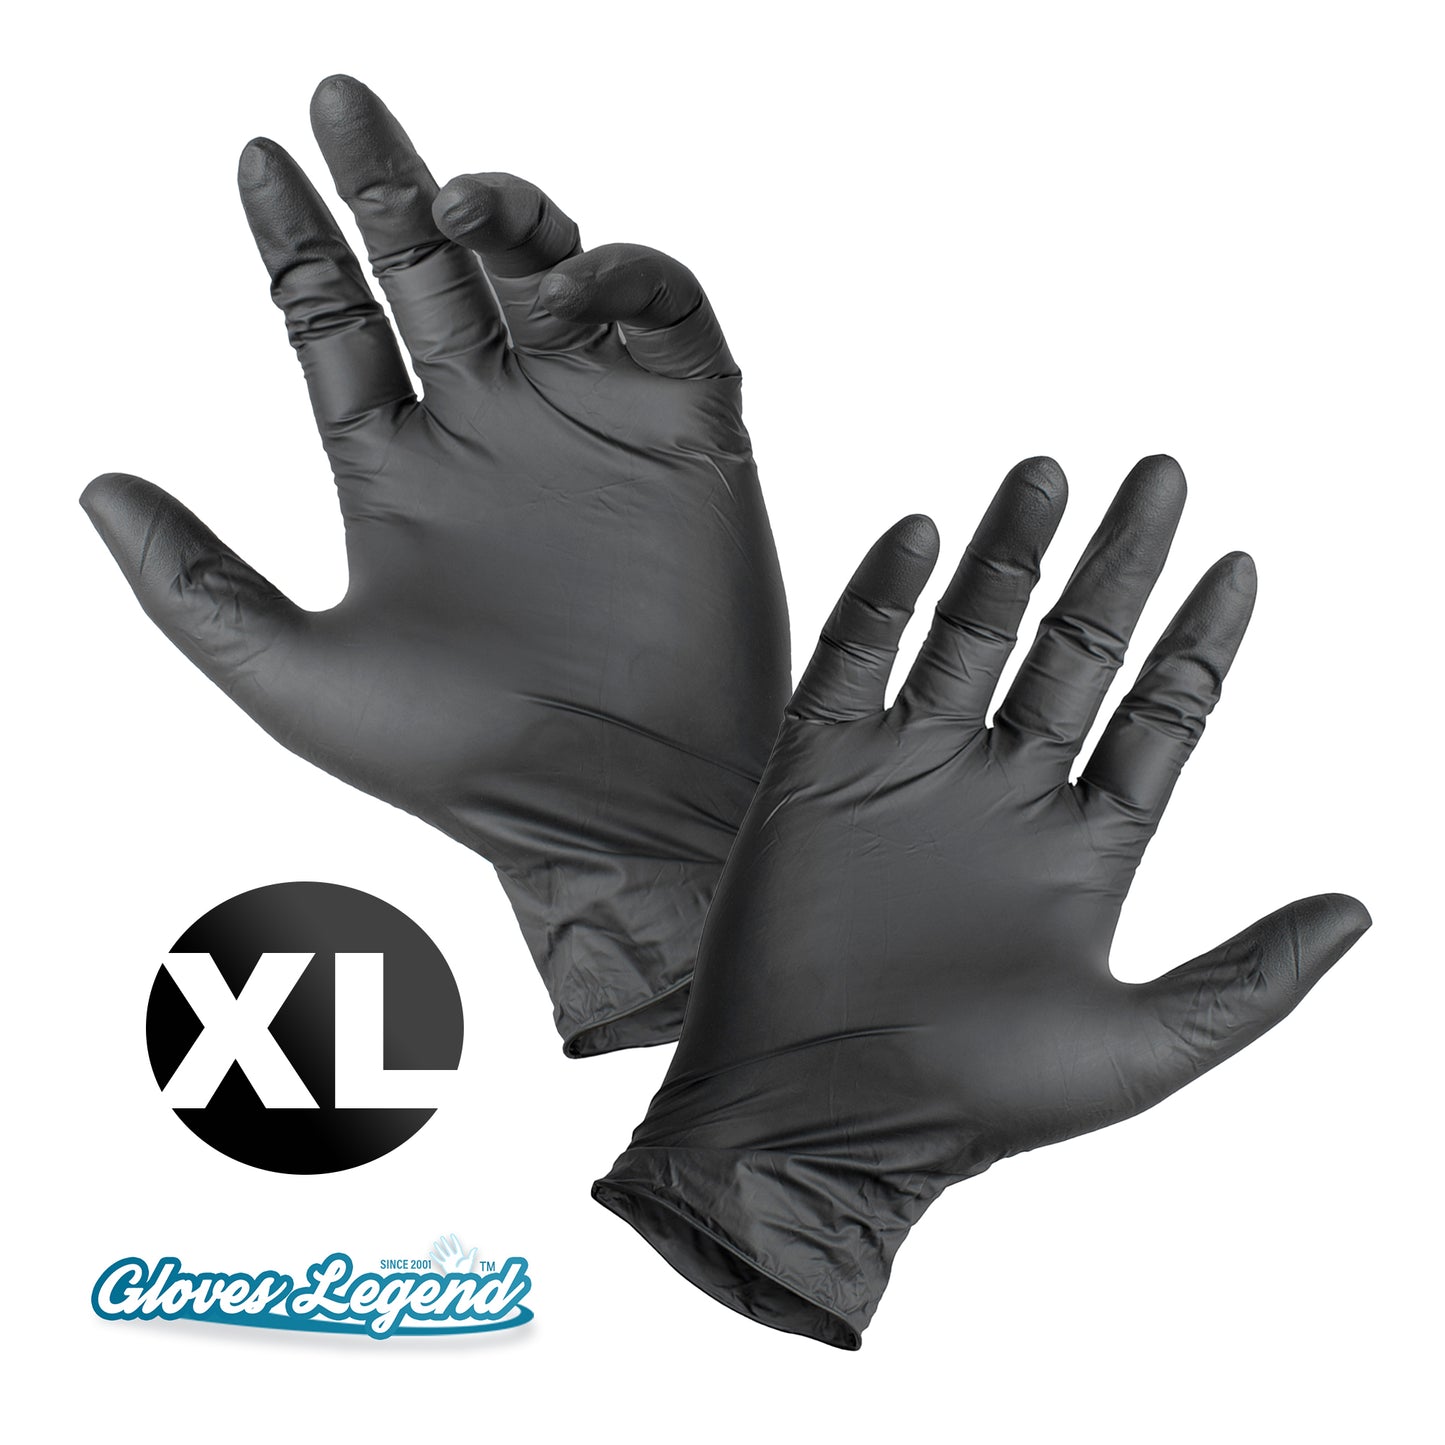 One Box - Size Extra Large - Black Latex Powder Free Medical Exam Tattoos Piercing Gloves